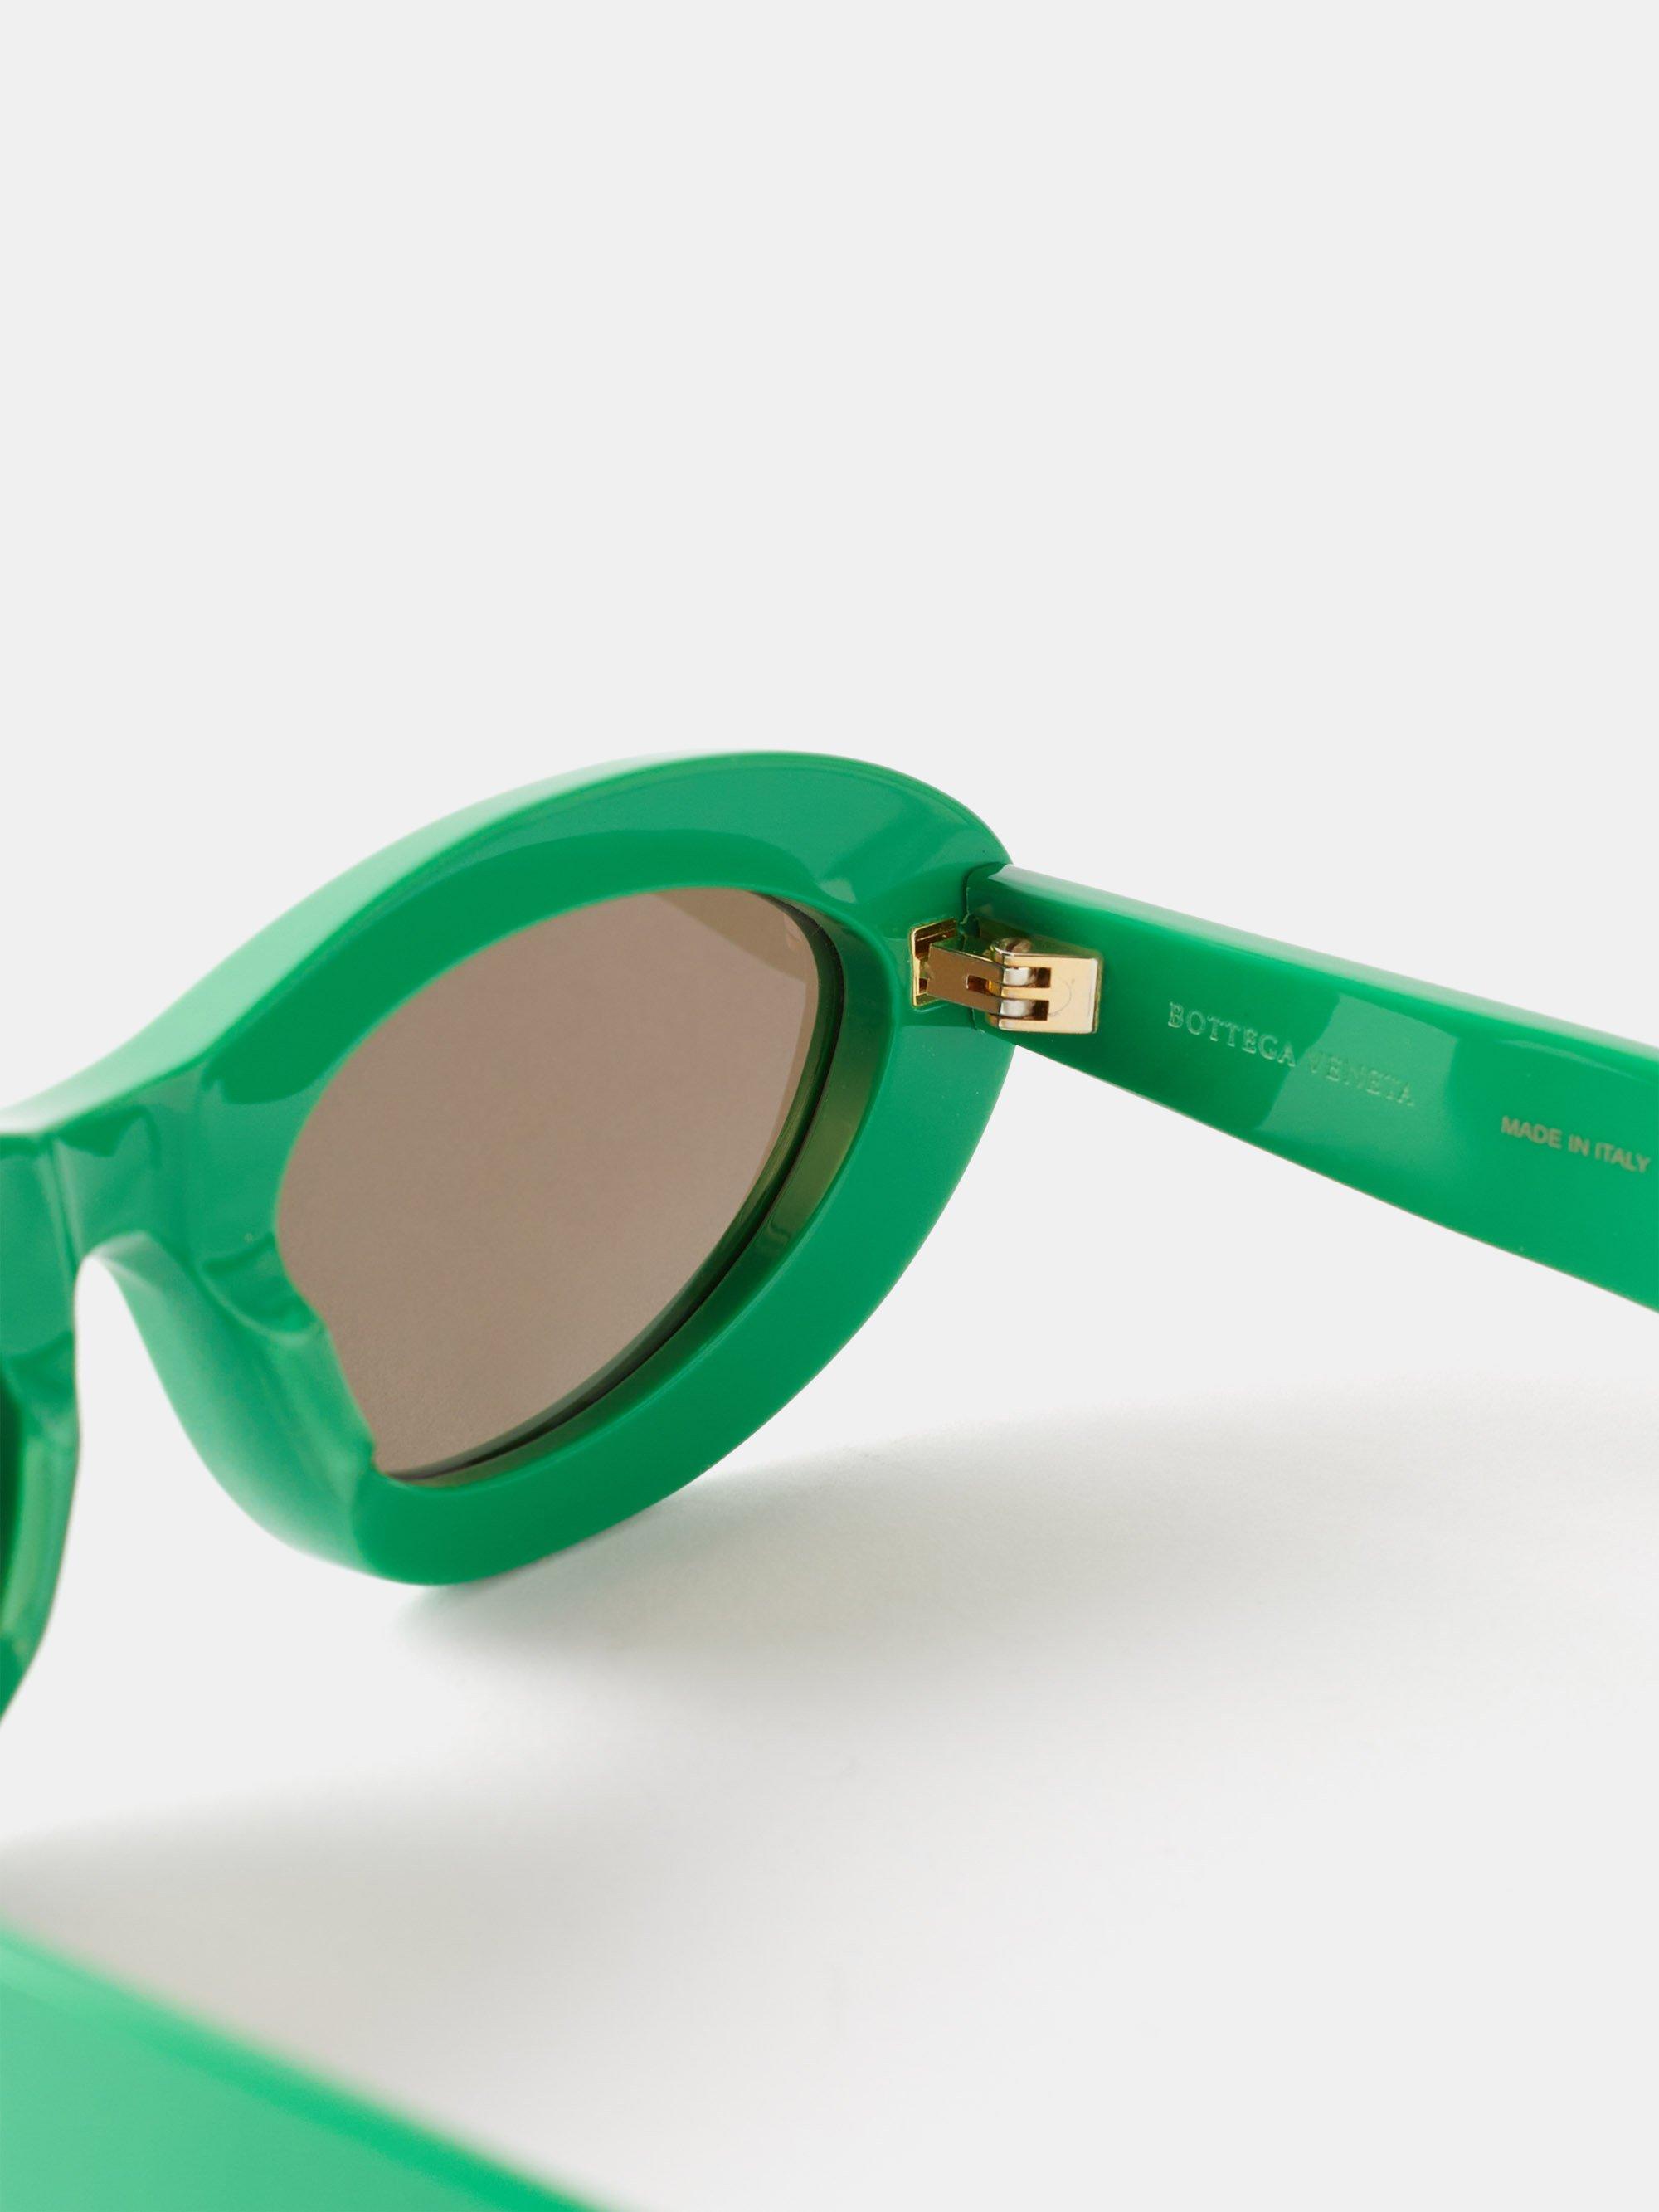 Bottega Veneta Bombe Round Acetate Sunglasses in Green | Lyst